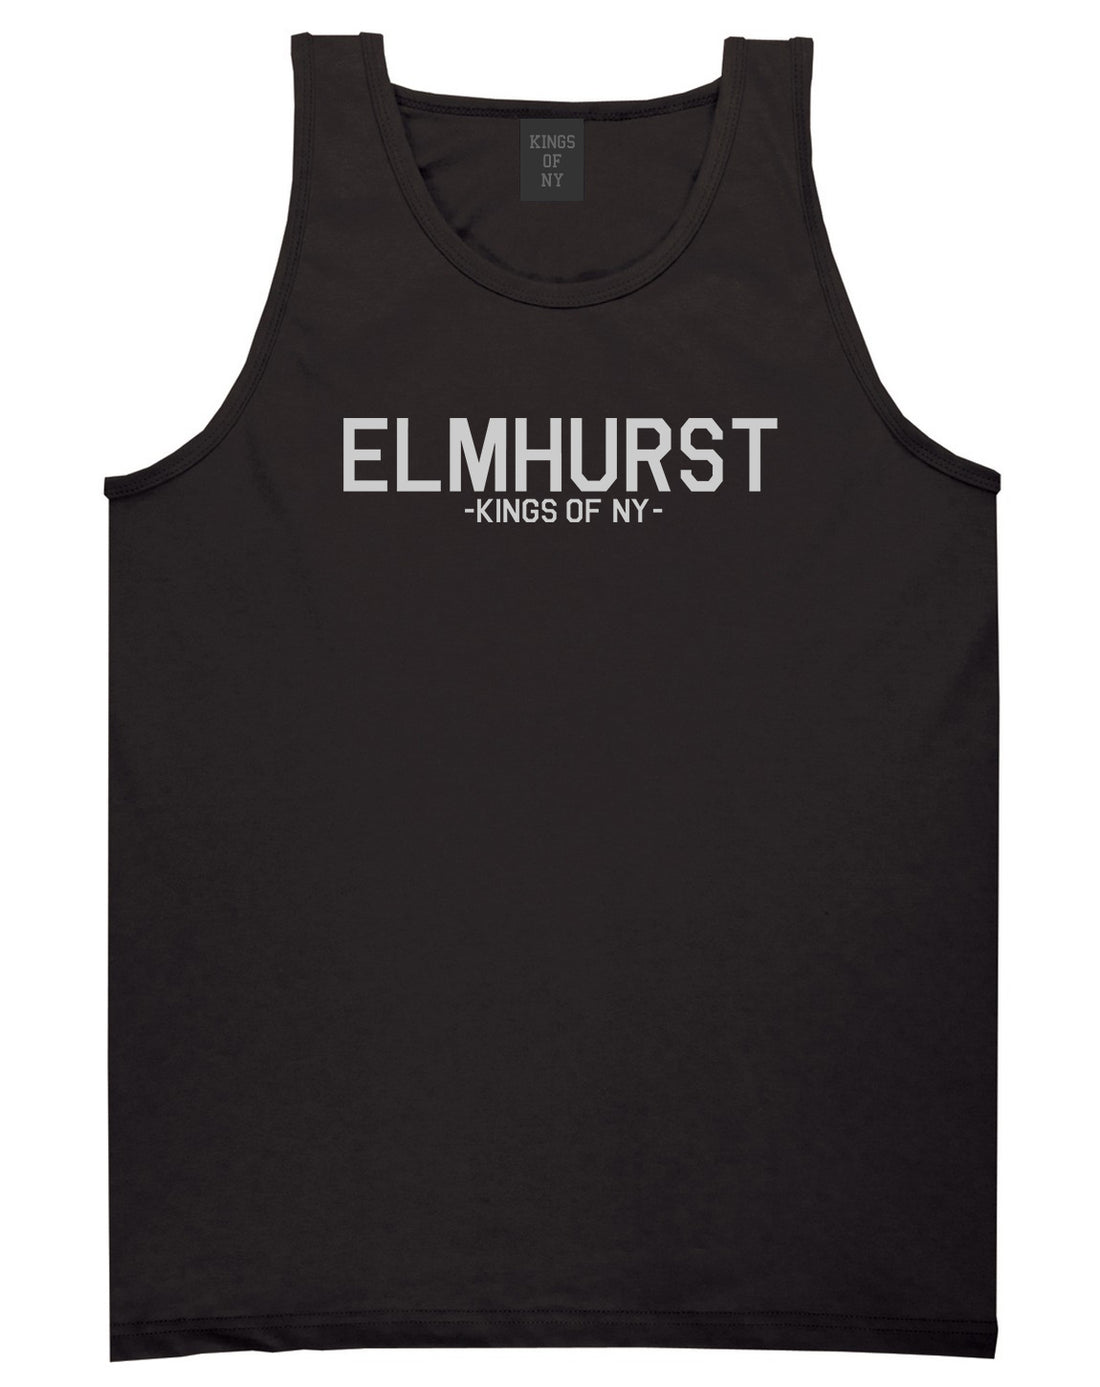 Elmhurst Queens New York Mens Tank Top Shirt Black